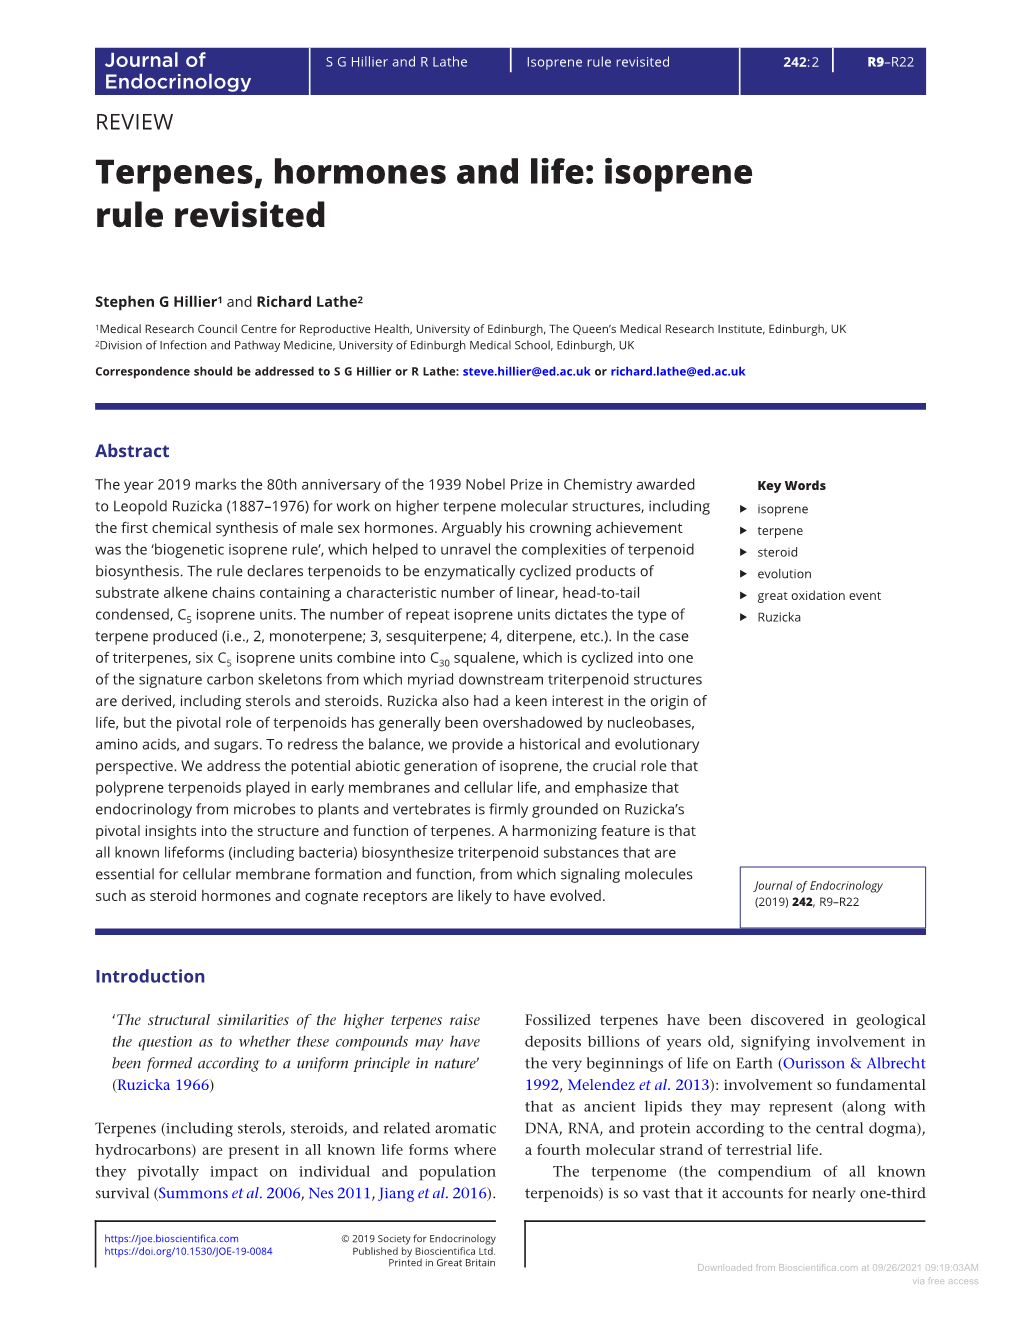 Terpenes, Hormones and Life: Isoprene Rule Revisited